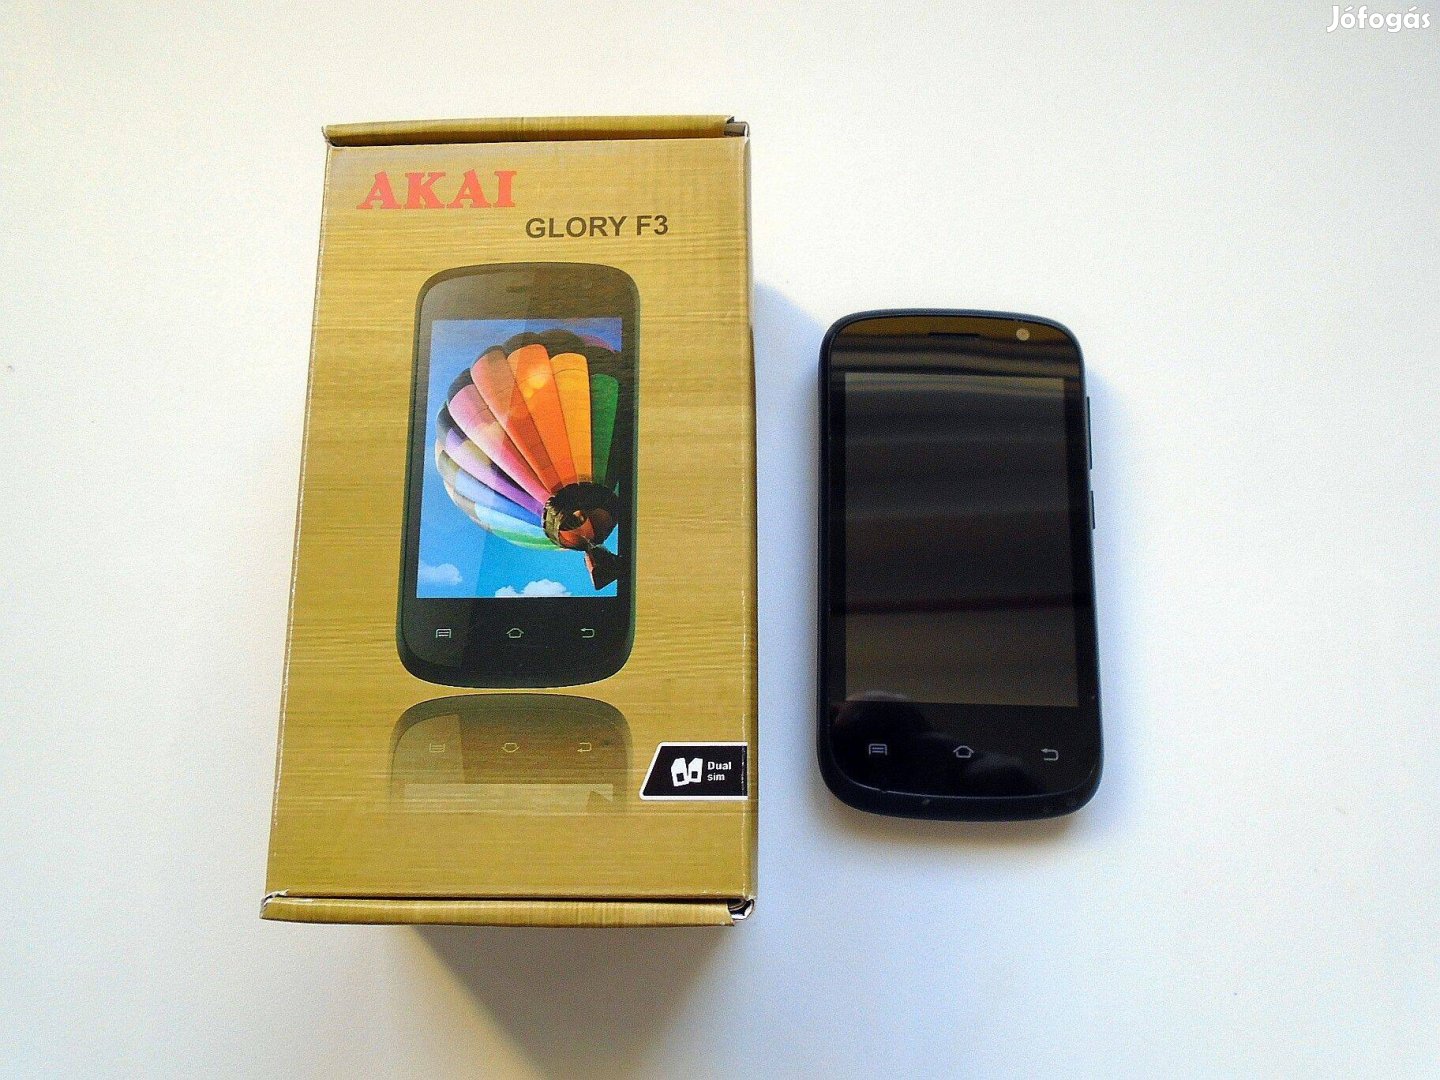 Akai Glory F3 dual sim mobil